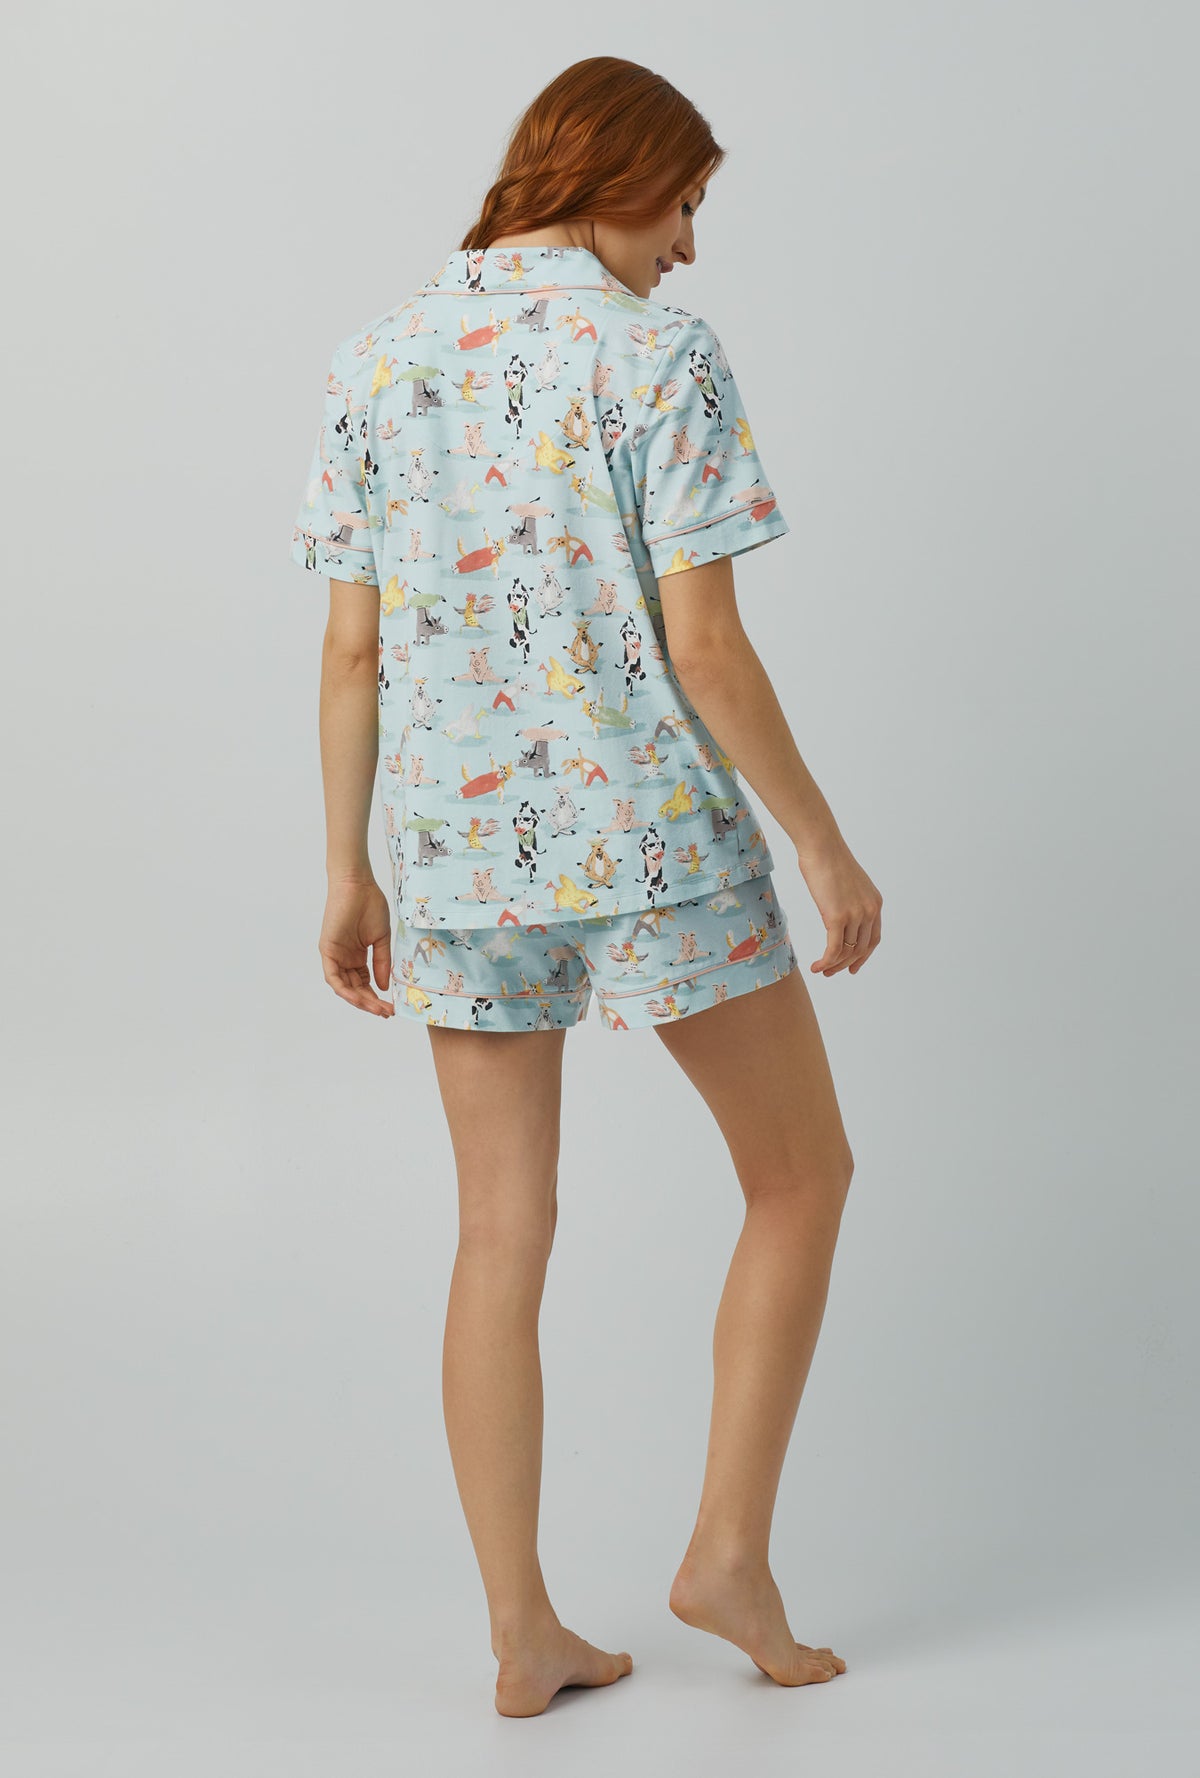 A lady wearing Short Sleeve Classic Shorty Stretch Jersey PJ Set with barnyard retreat print